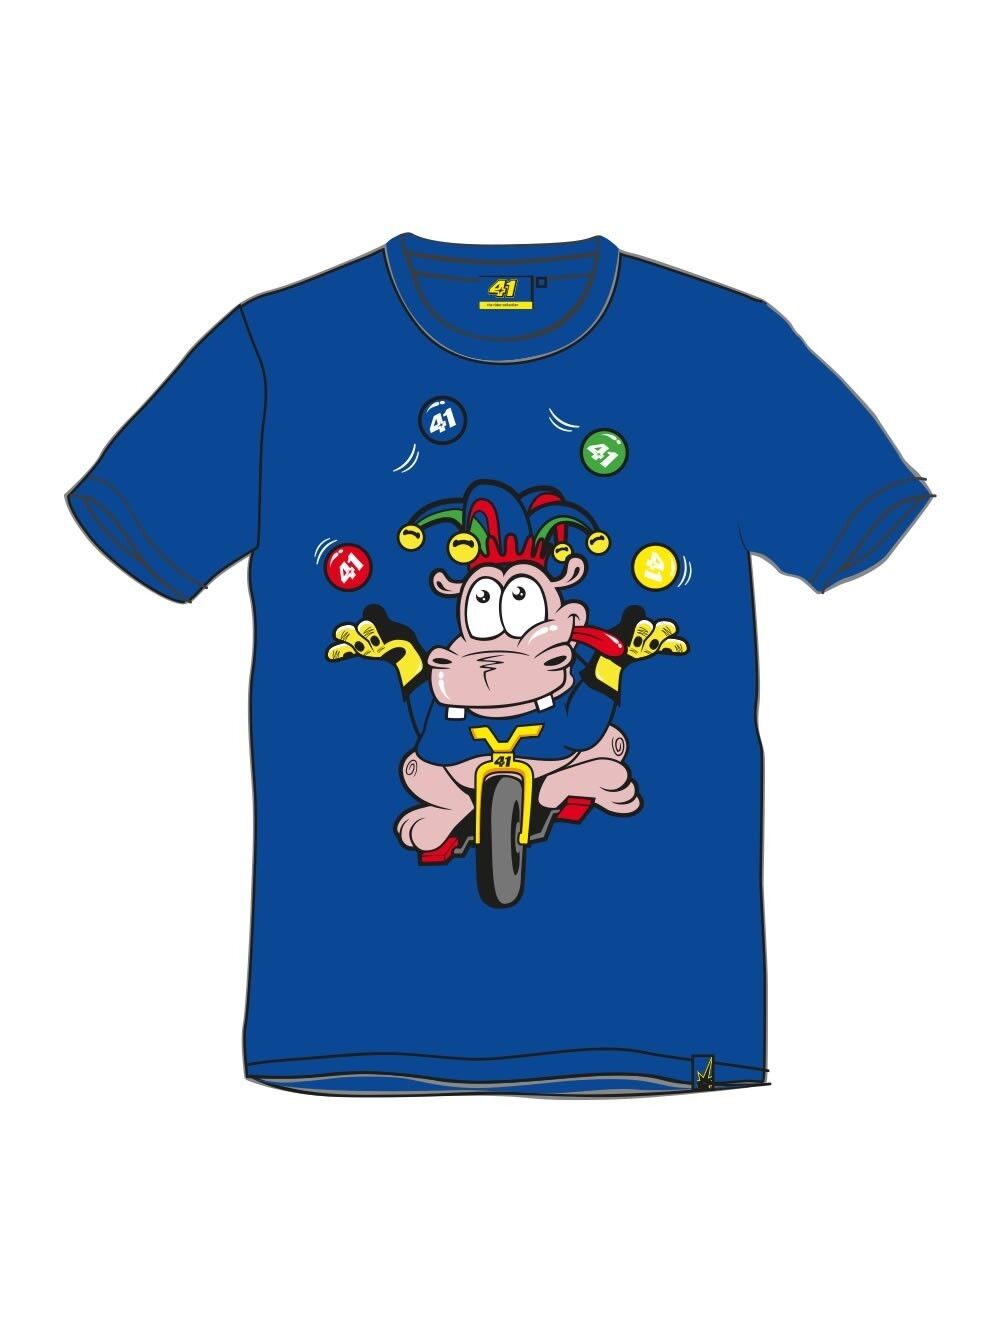 Official Aleix Espargaro Hippo Kids T Shirt - 16 32305